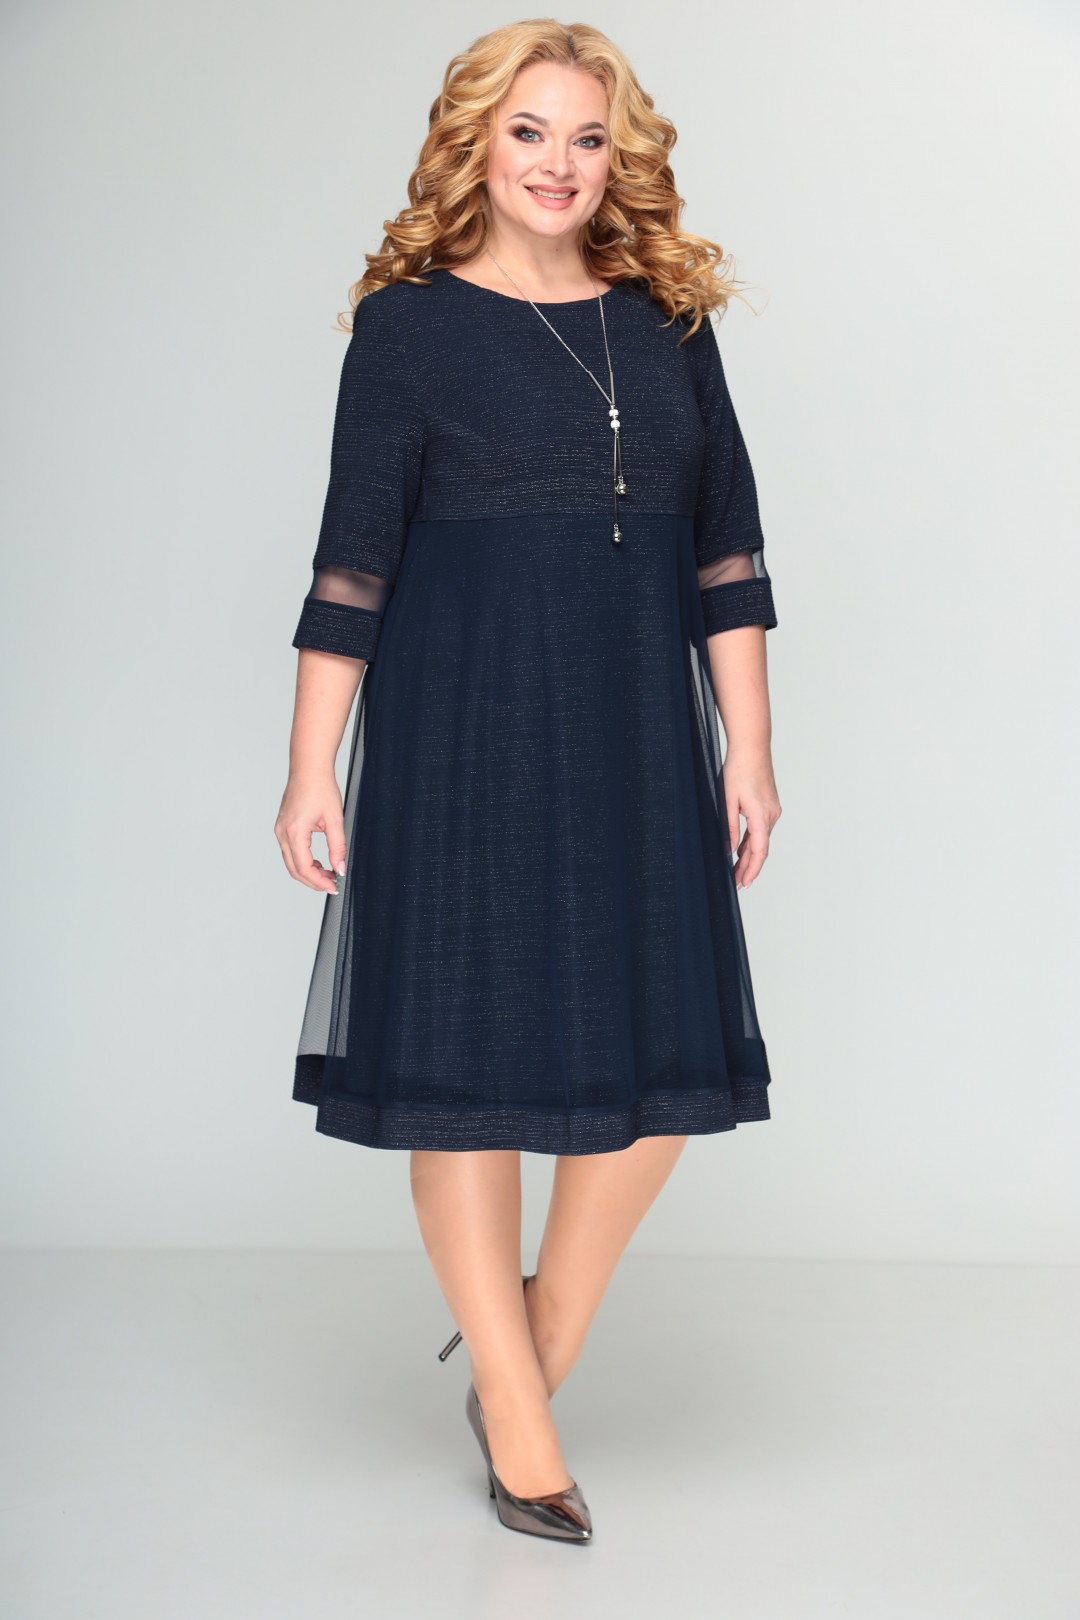 Платье Мода-Версаль 2115 т.синий